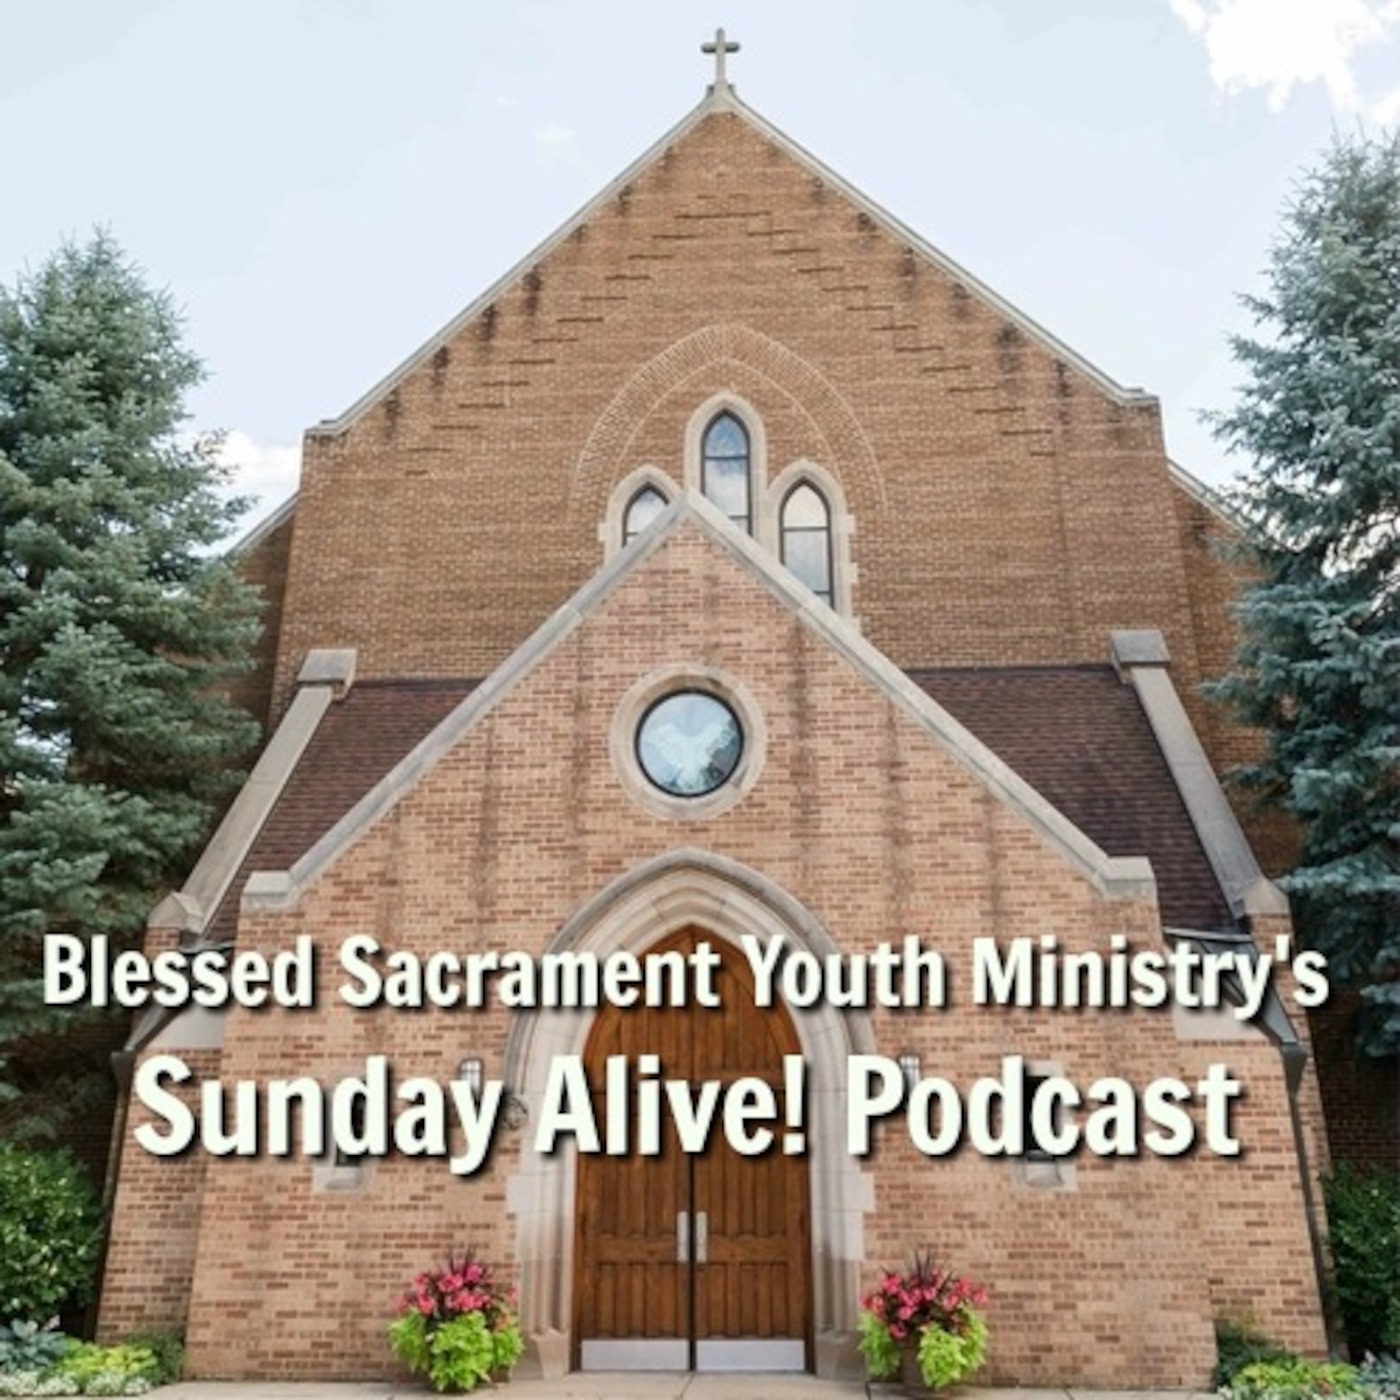 The Sunday Alive Podcast - Sunday, January 26, 2020 - the Third Sunday of Ordinary Time